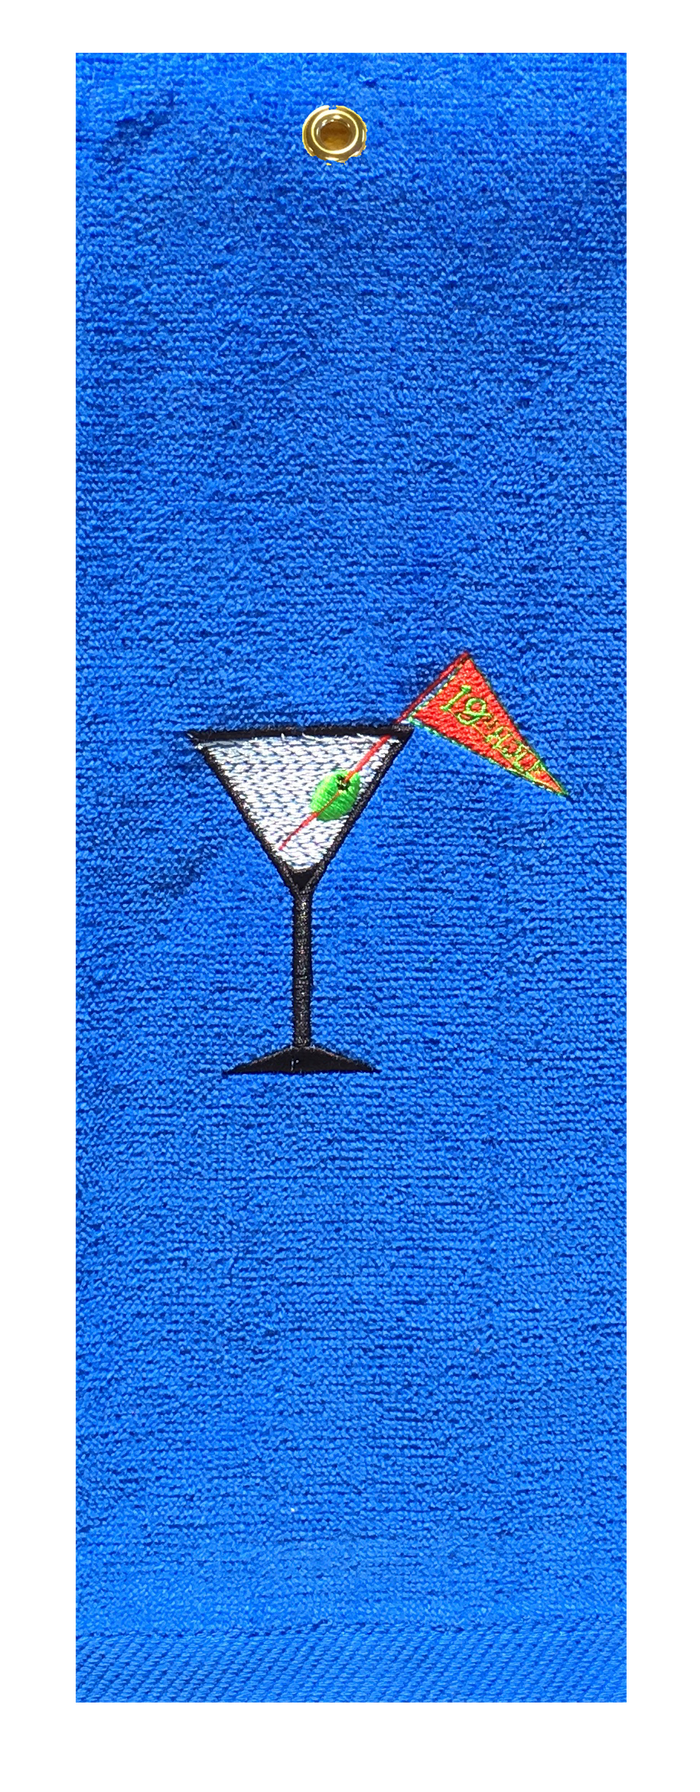 Golf Towel - Martini 19th - Royal Blue